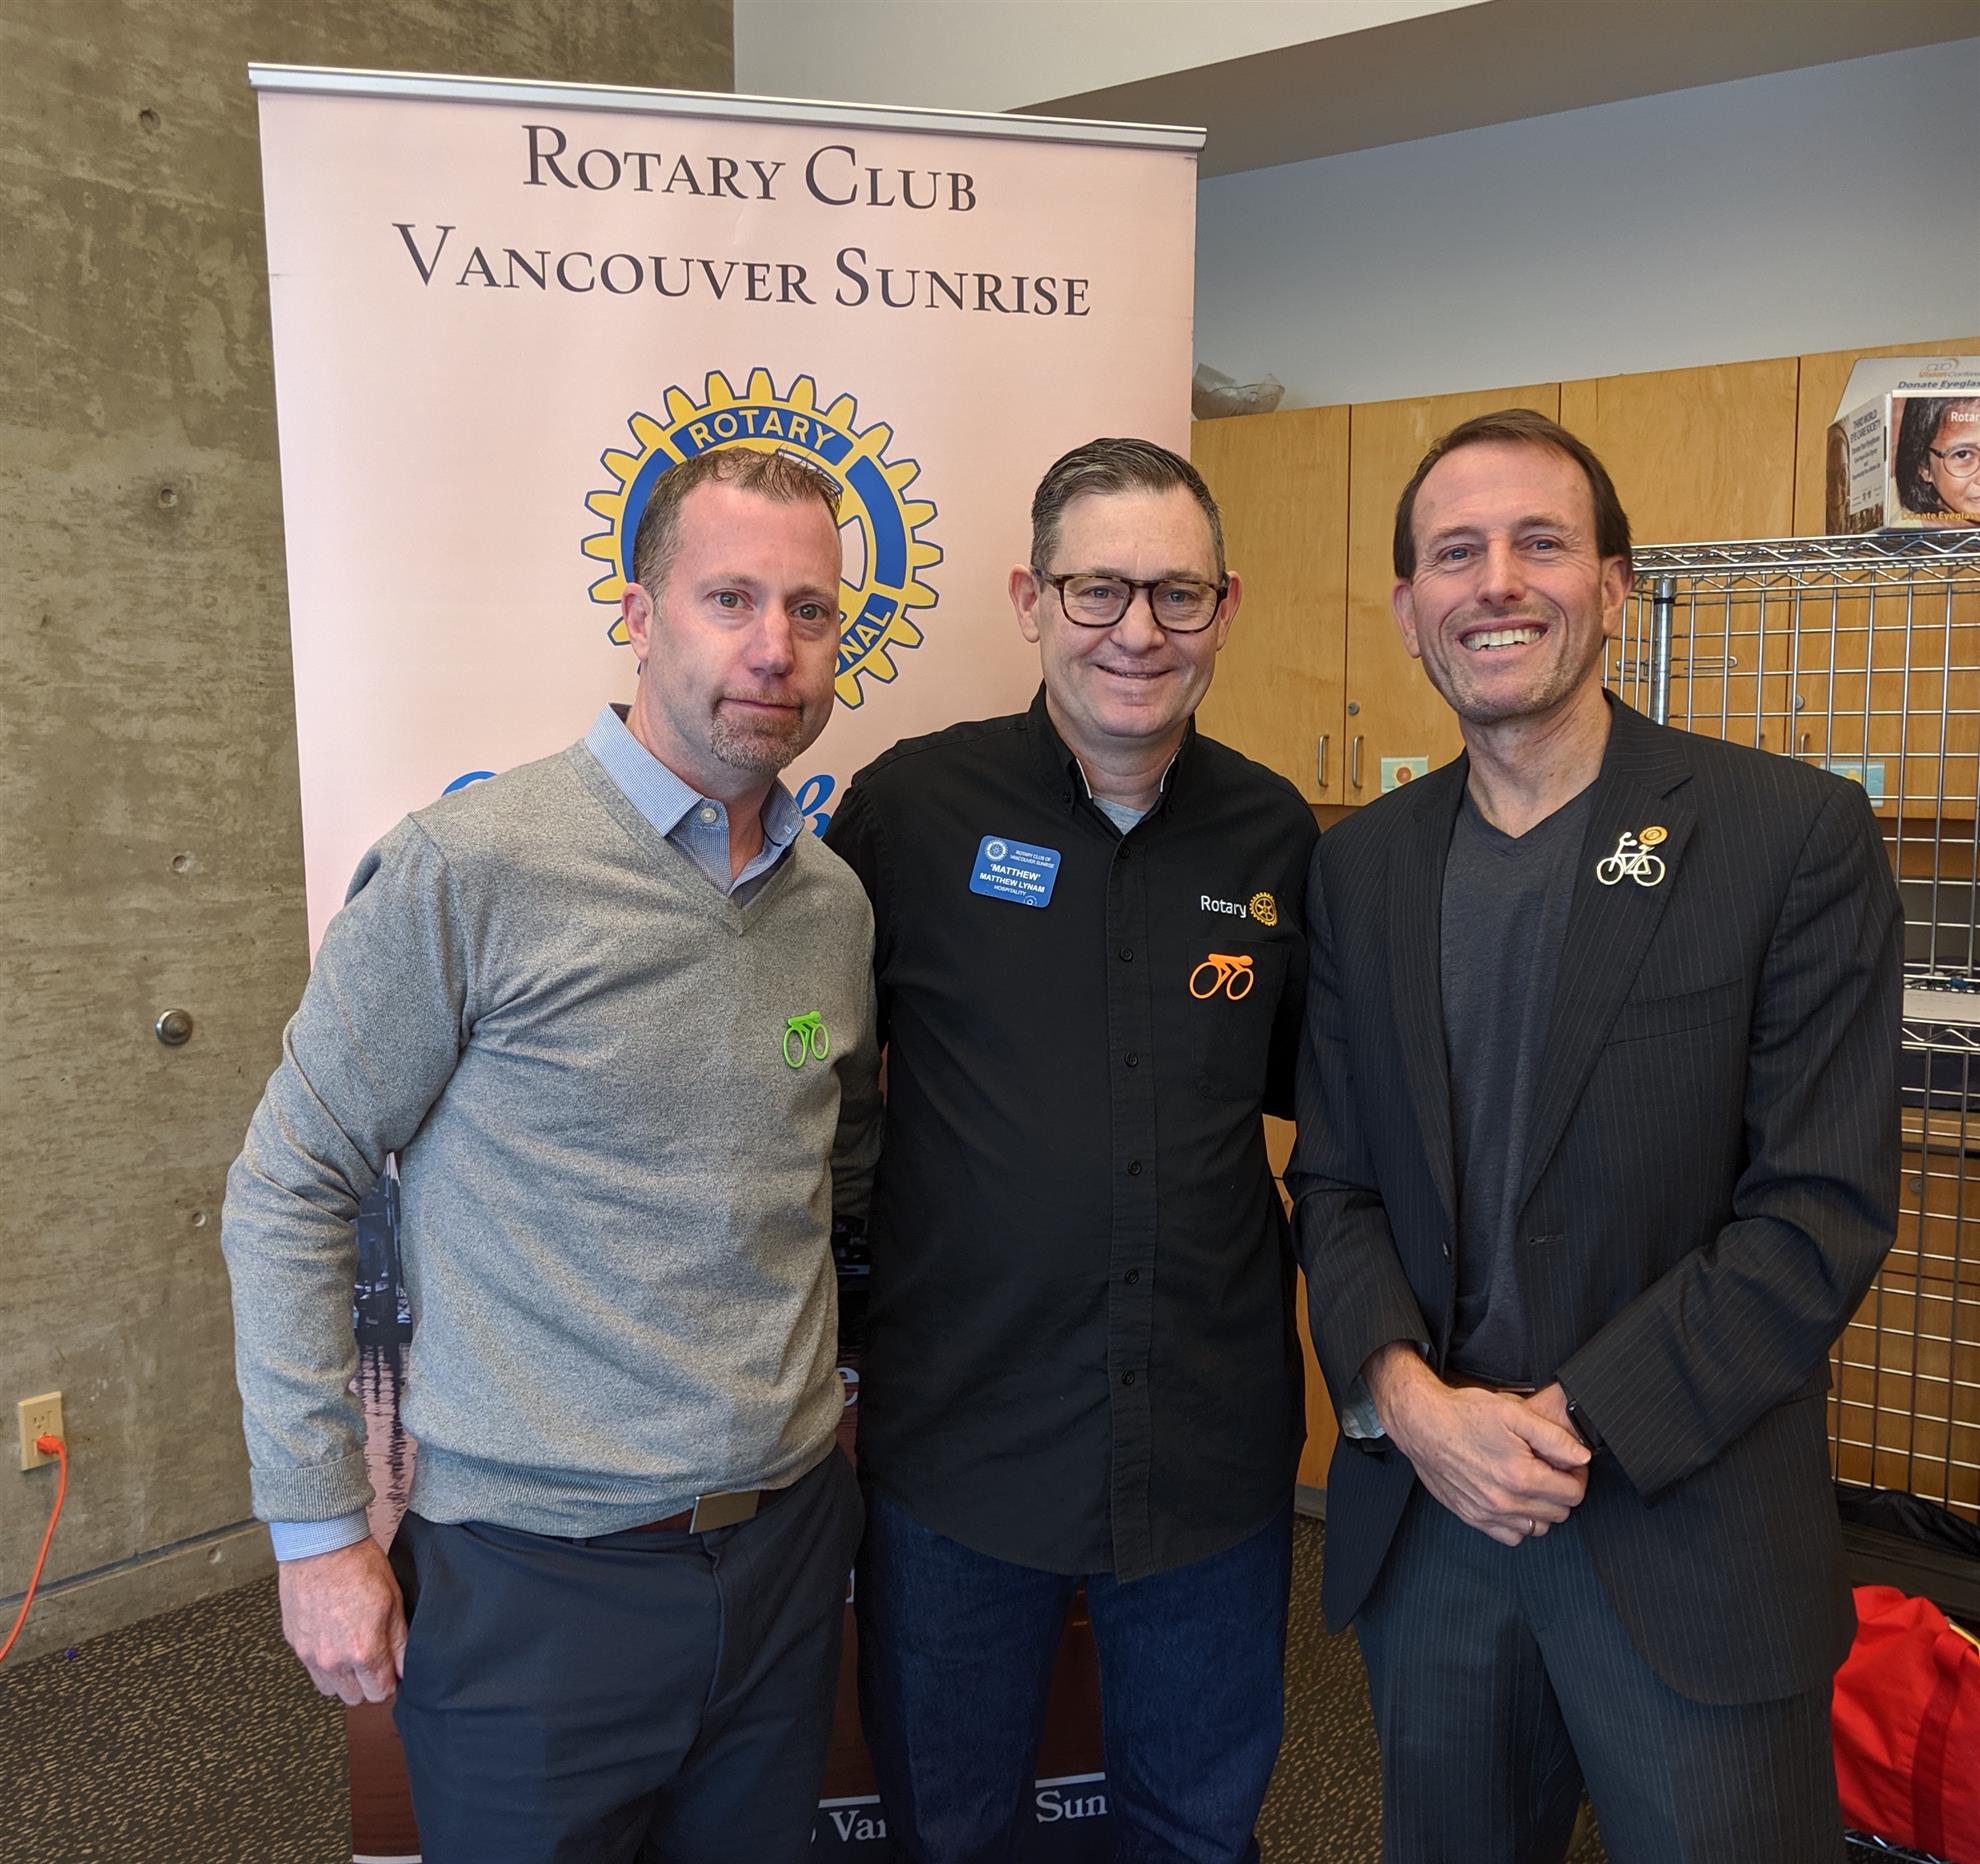 Rotary Vancouver Sunrise. John Weston